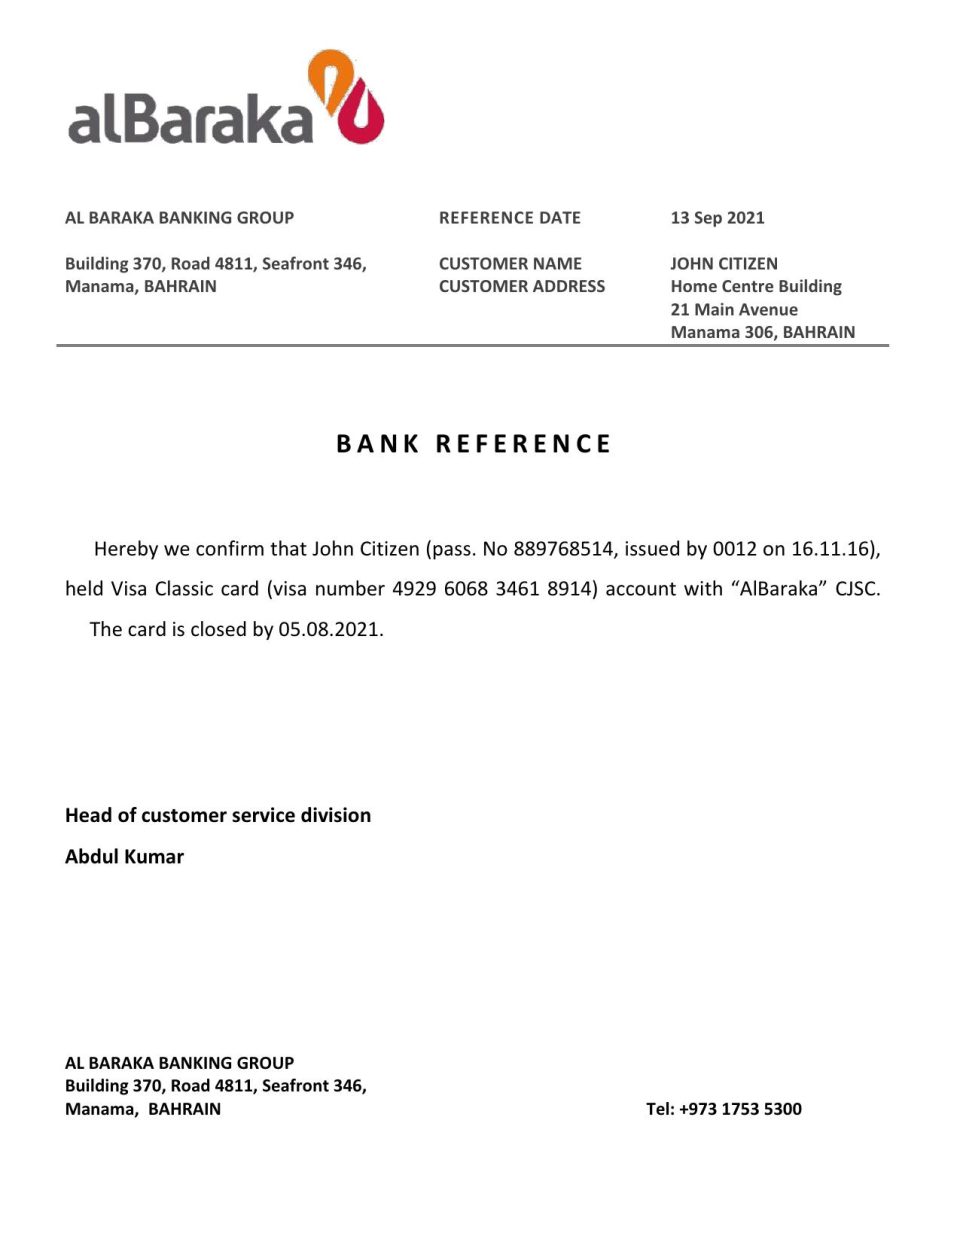 Download Bahrain Al Baraka Bank Reference Letter Templates | Editable Word